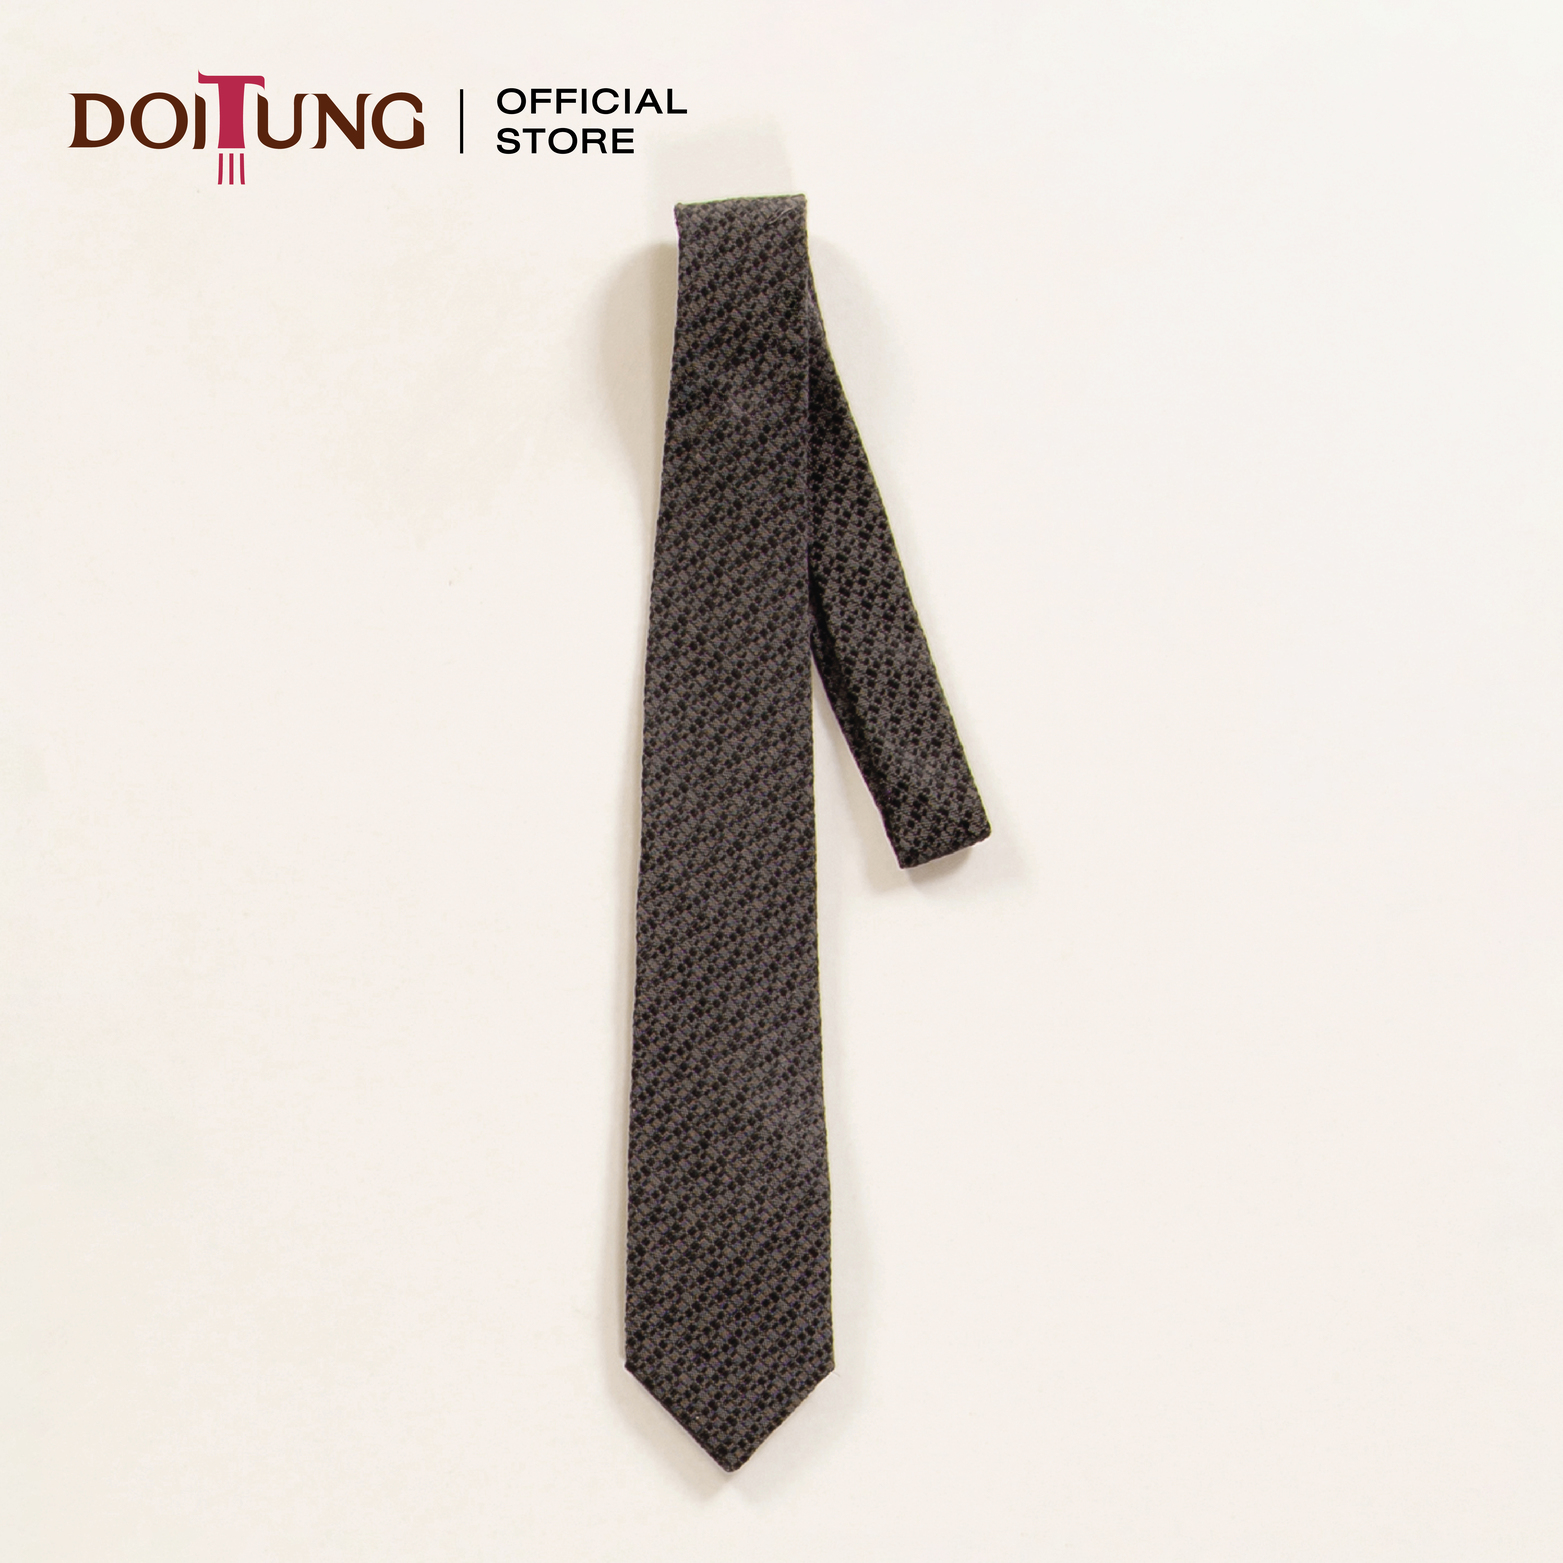 DoiTung Necktie - Gift set 2020 -Tiny Triangle (7.6x150 cm.) ชุดของขวัญ เนคไท ดอยตุง